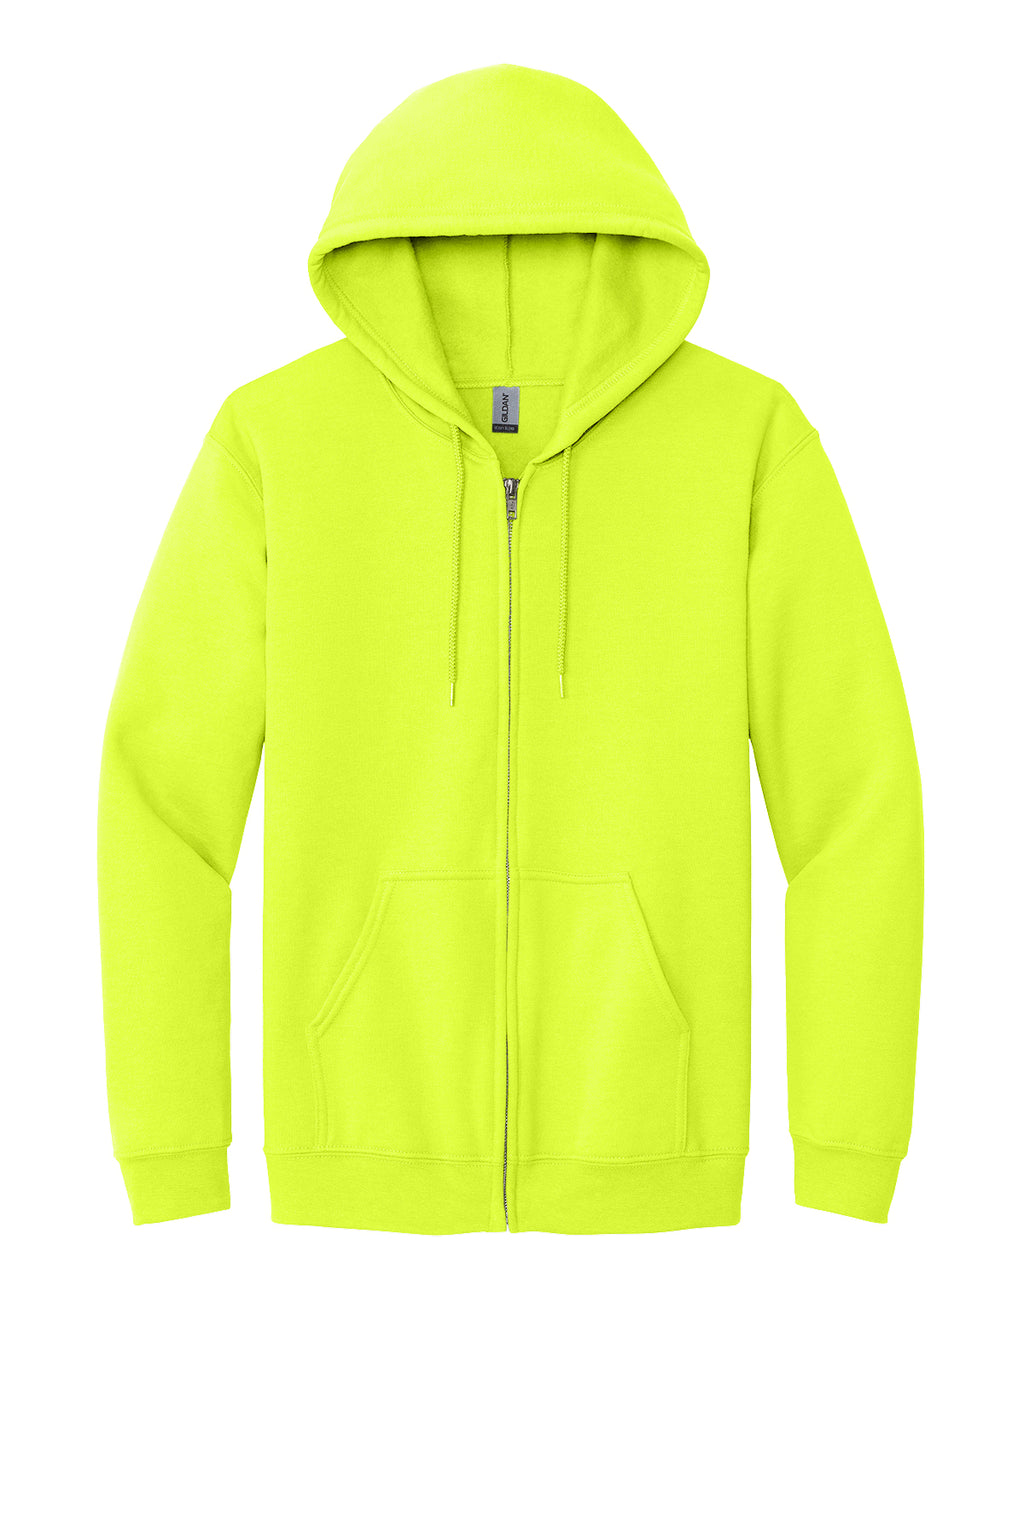 Gildan Full-Zip Hooded Sweatshirt Mens/Unisex Hoodies Carolina Safety Green